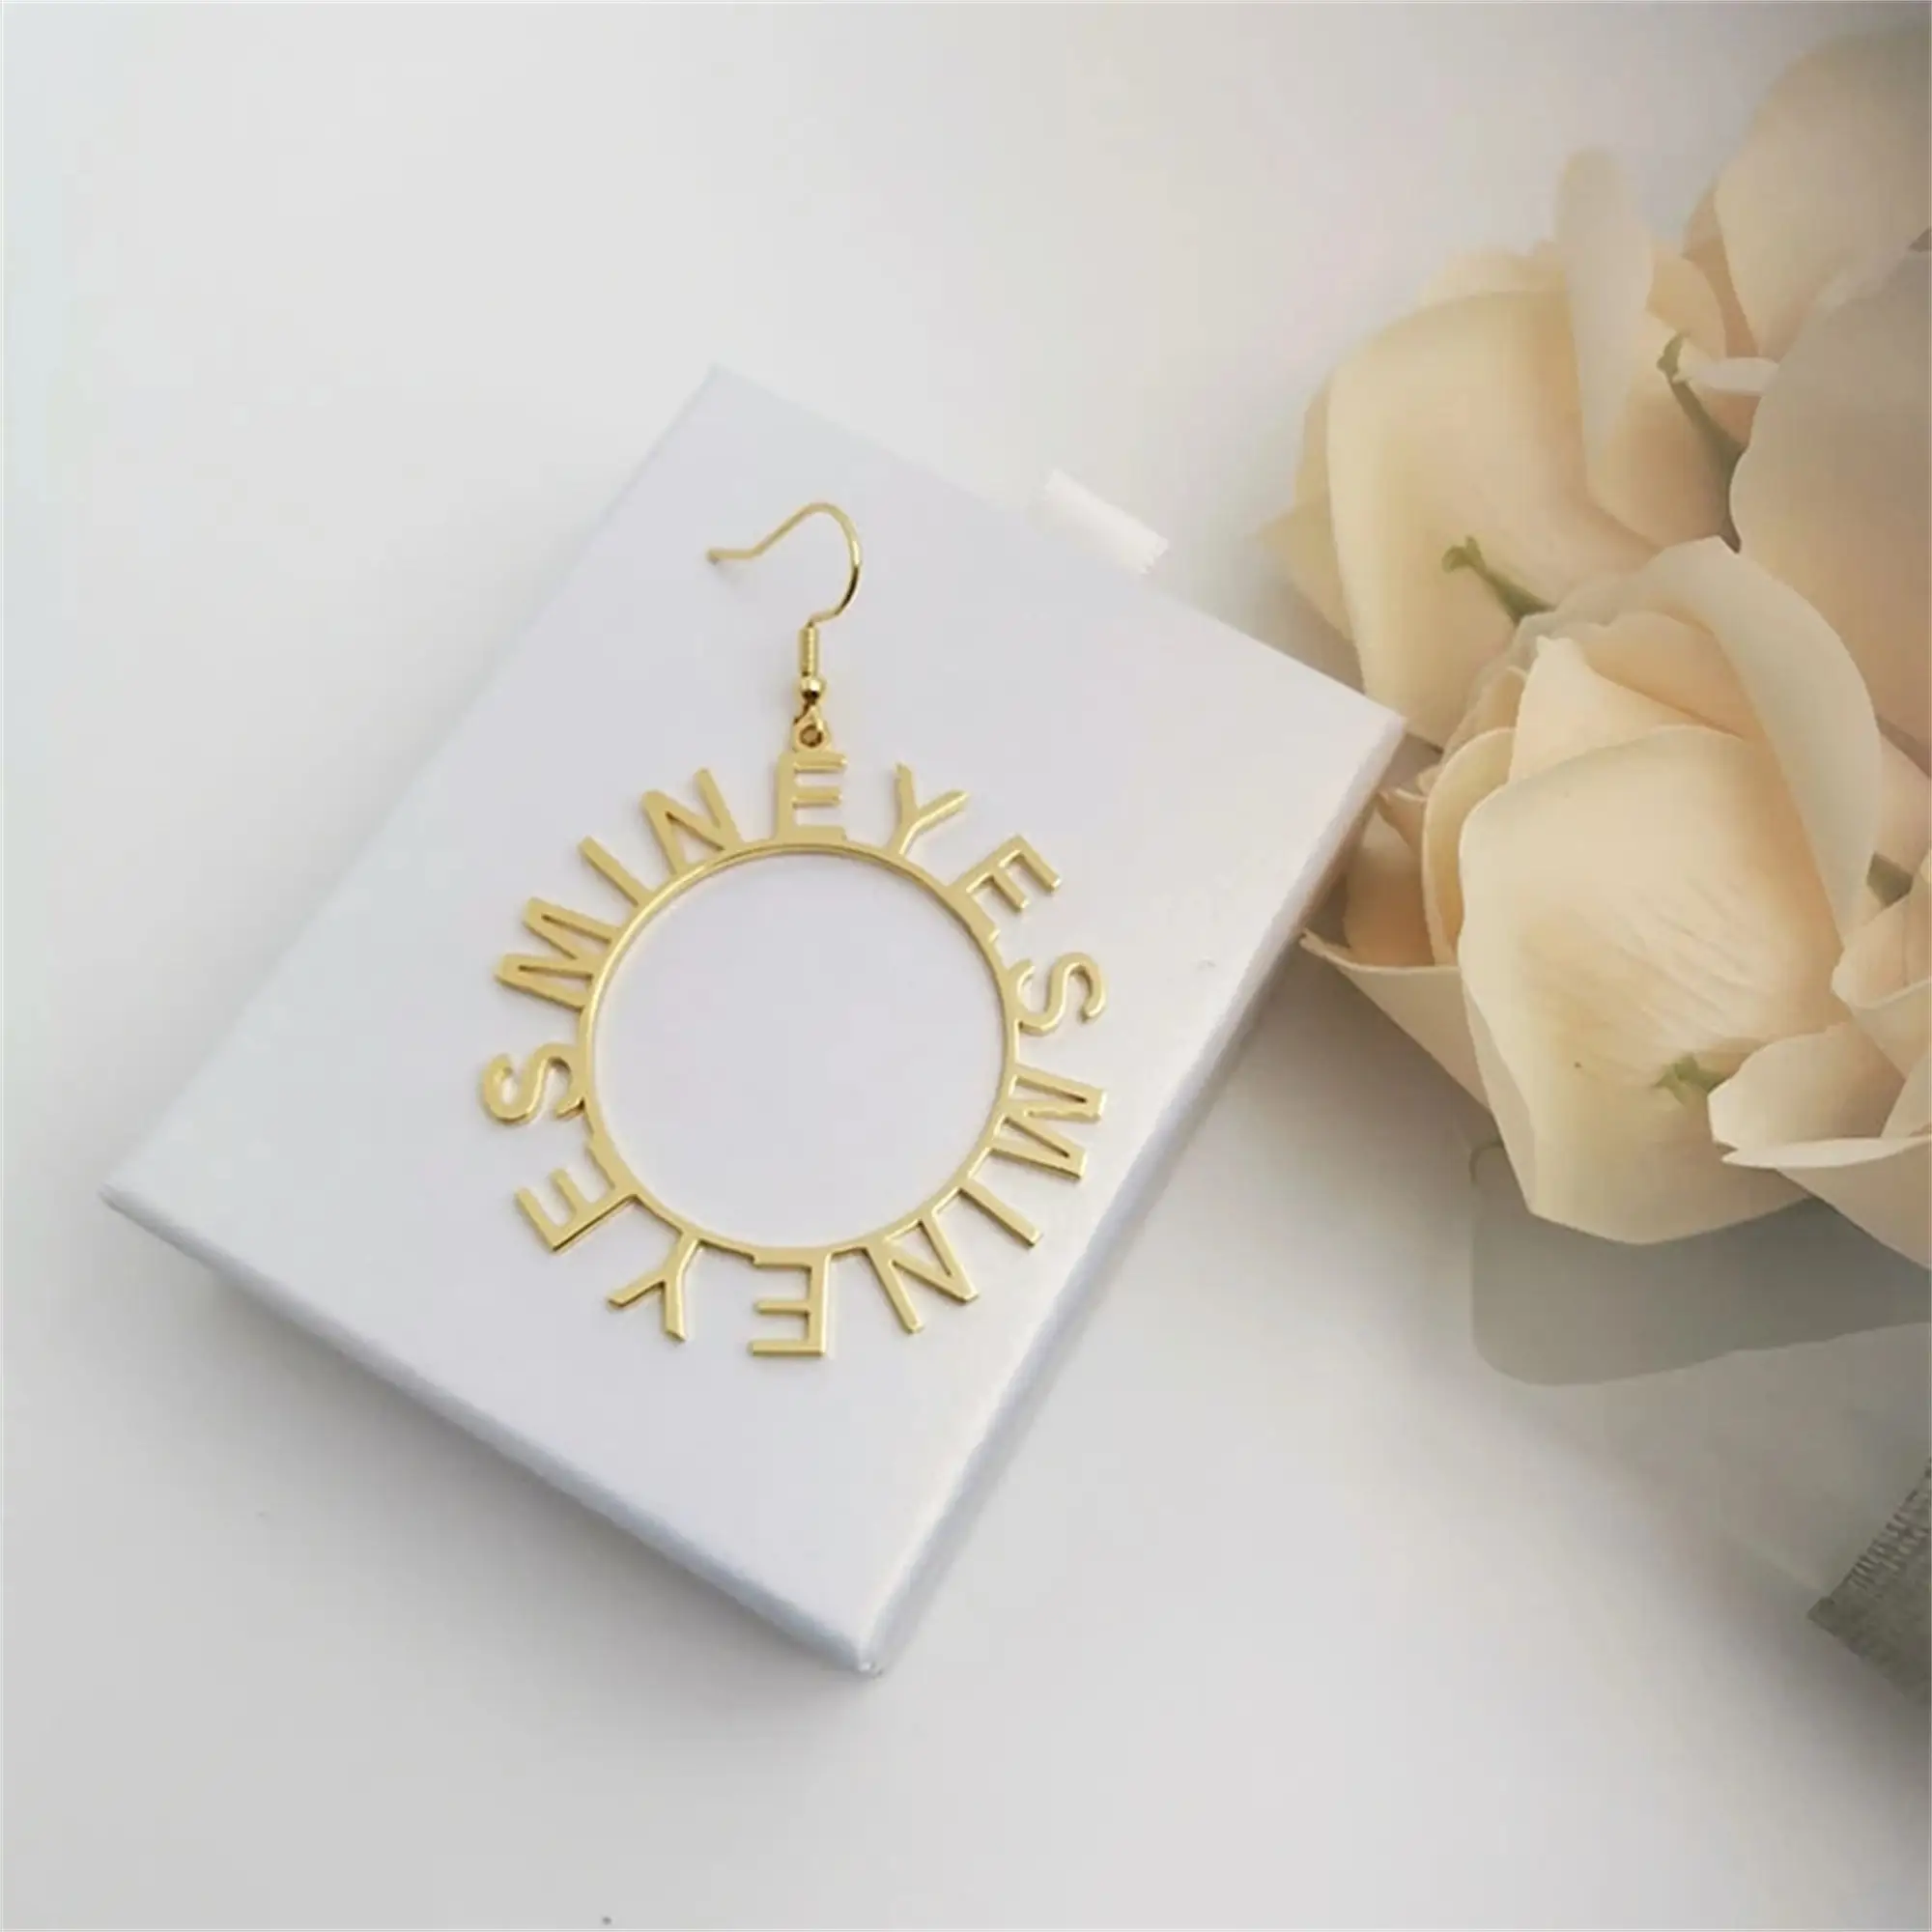 Hot Sale Personalized Stainless Steel Name Letter Earrings 18K Gold Dangle Earrings Hoop Jewelry For Women's Girl's Gift